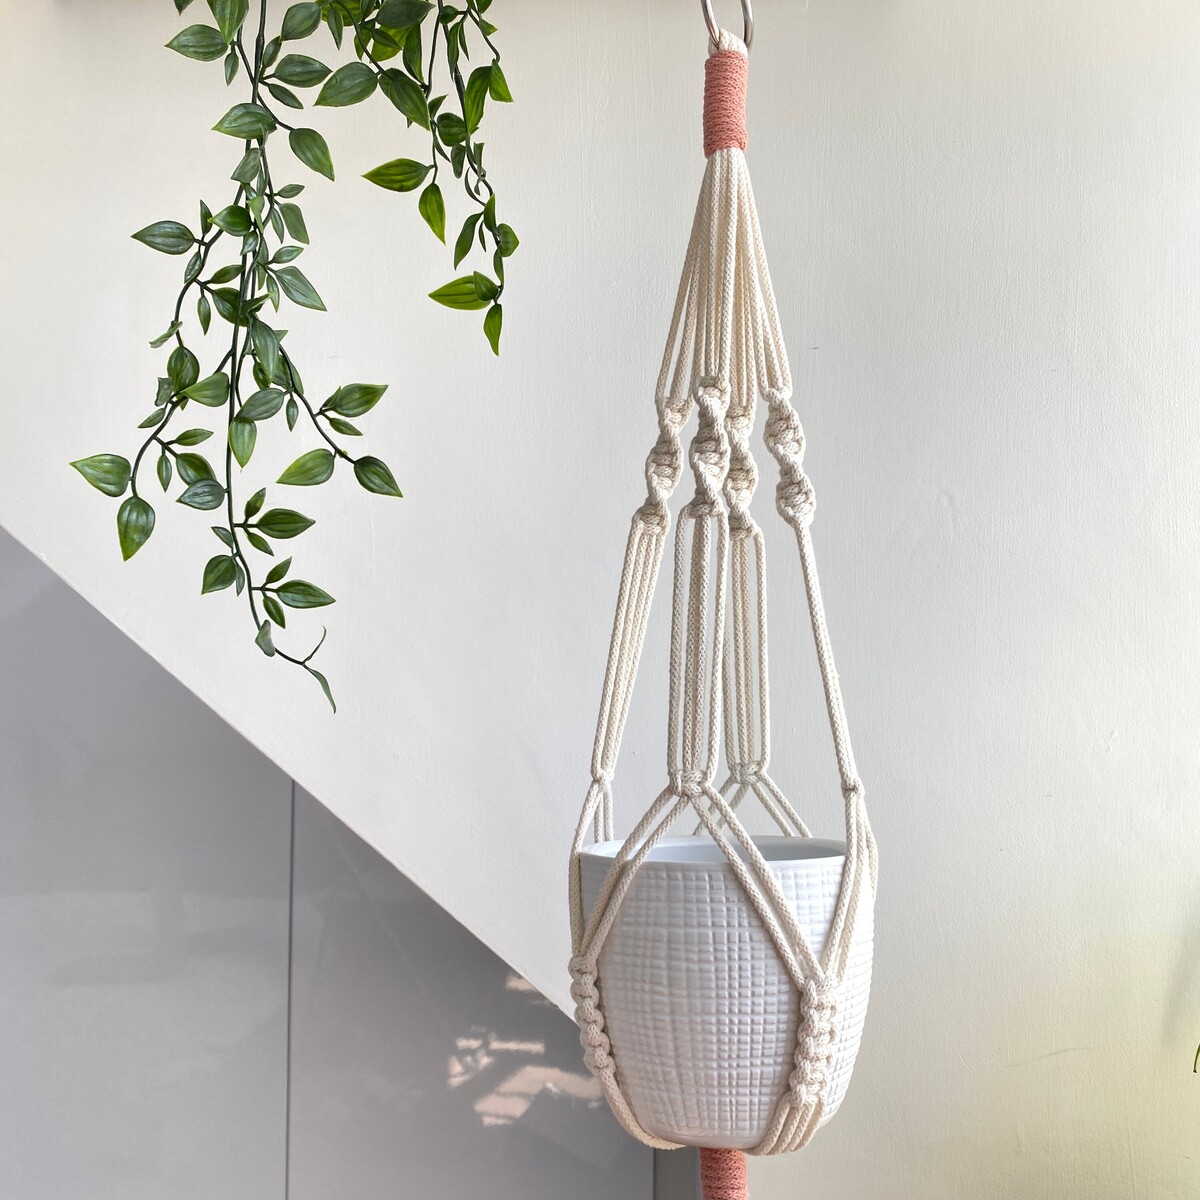 How To Make Macramé Hanging Baskets